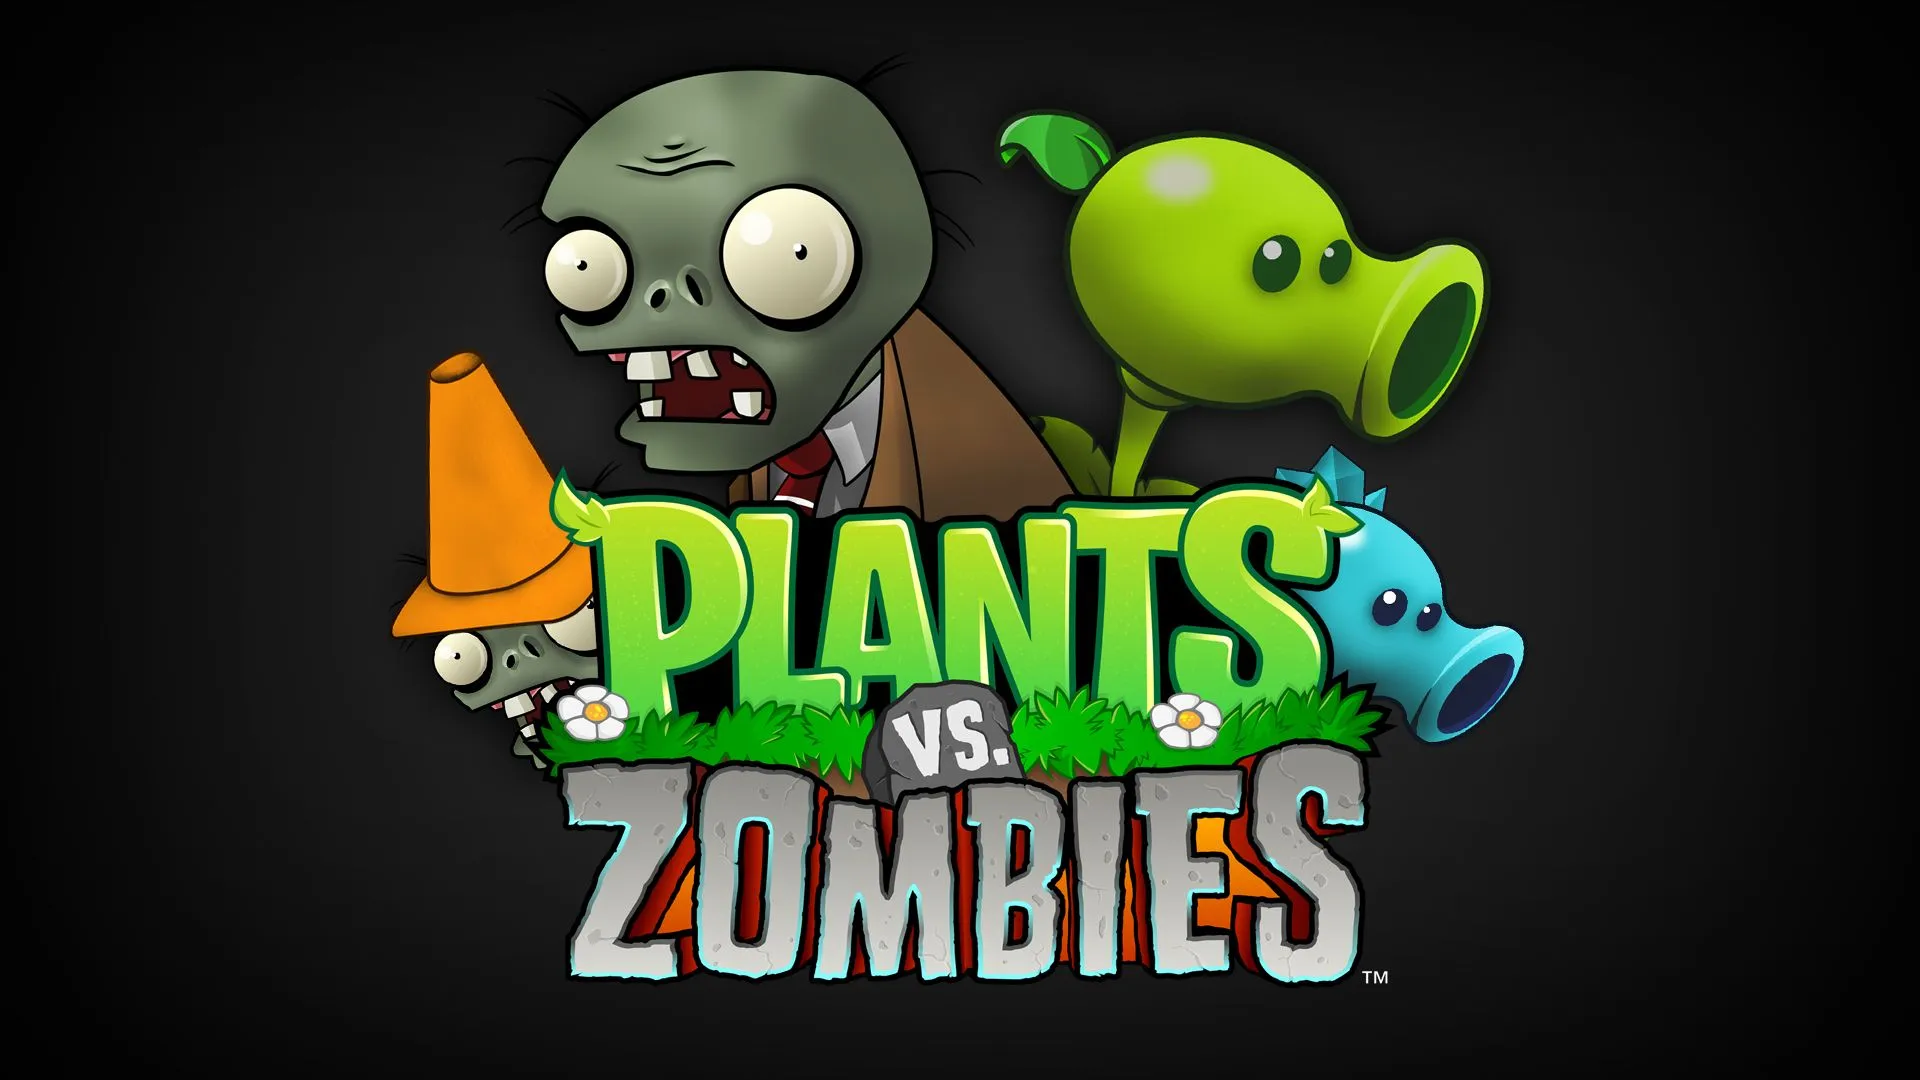 Wallpapers de Plantas vs Zombie - Taringa!